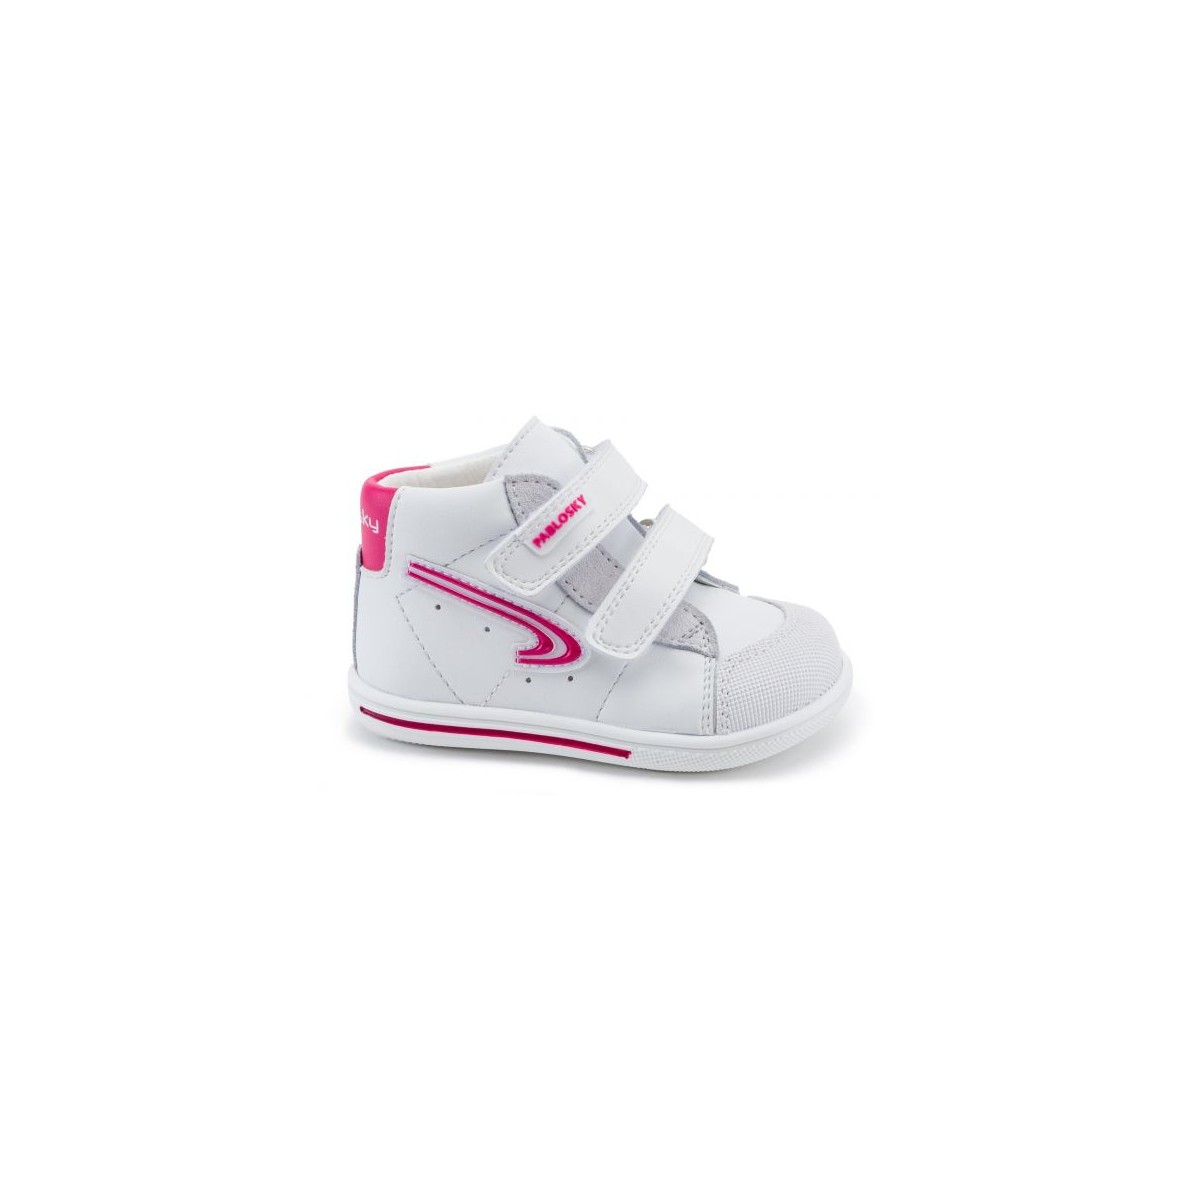 Pablosky bota deportivo bebe niña, blanca 18 al 23 Pa002707 Blanco Talla 18